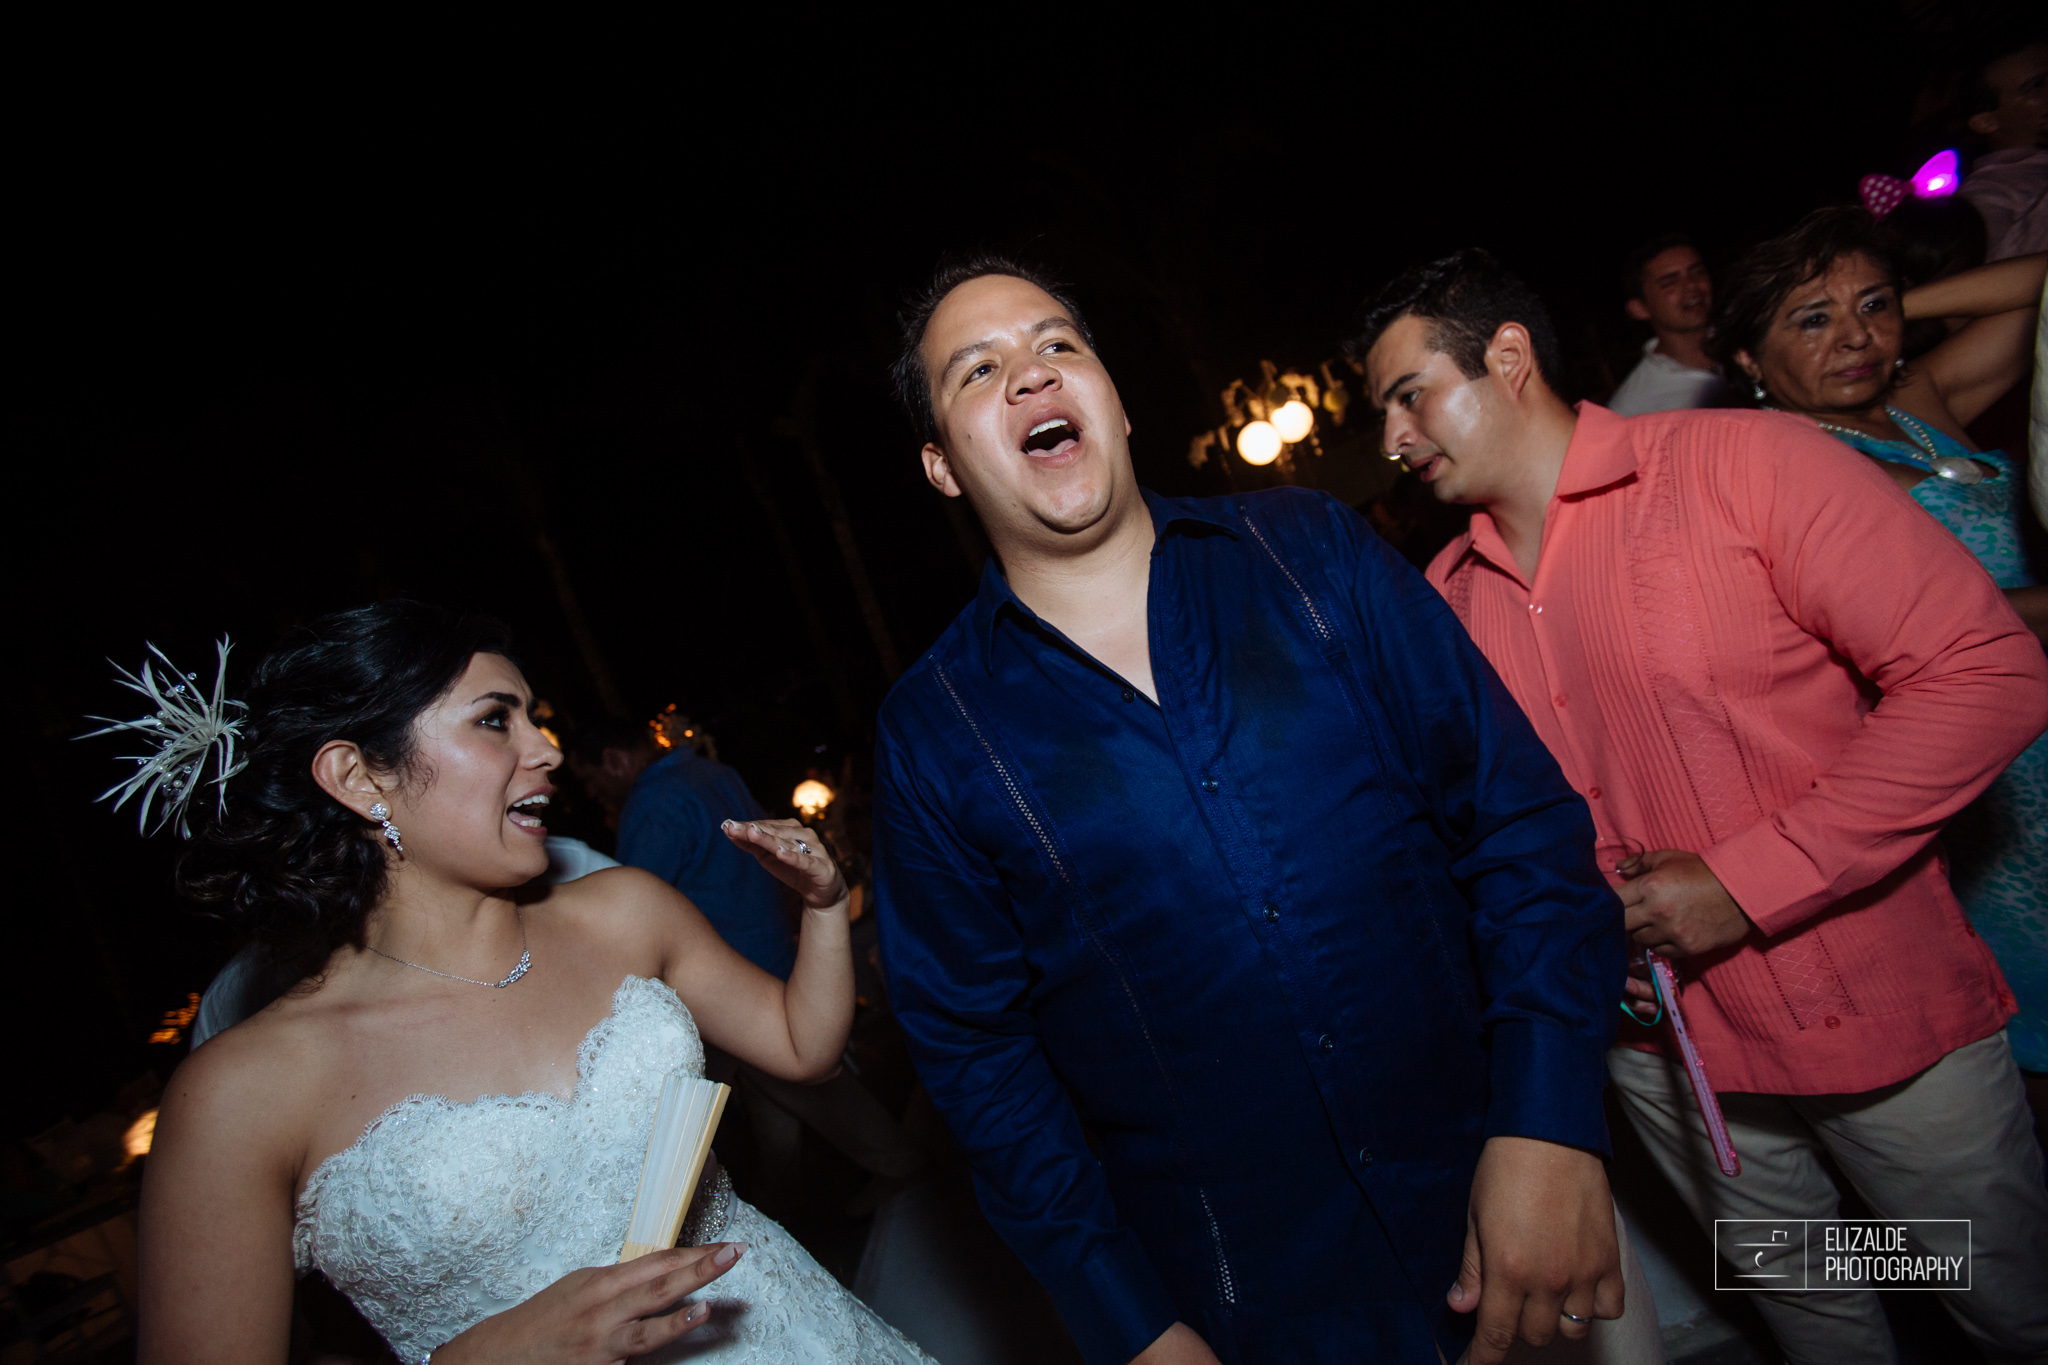 Pay and Ferran_Acapulco_Destination Wedding_Elizalde Photography-124.jpg